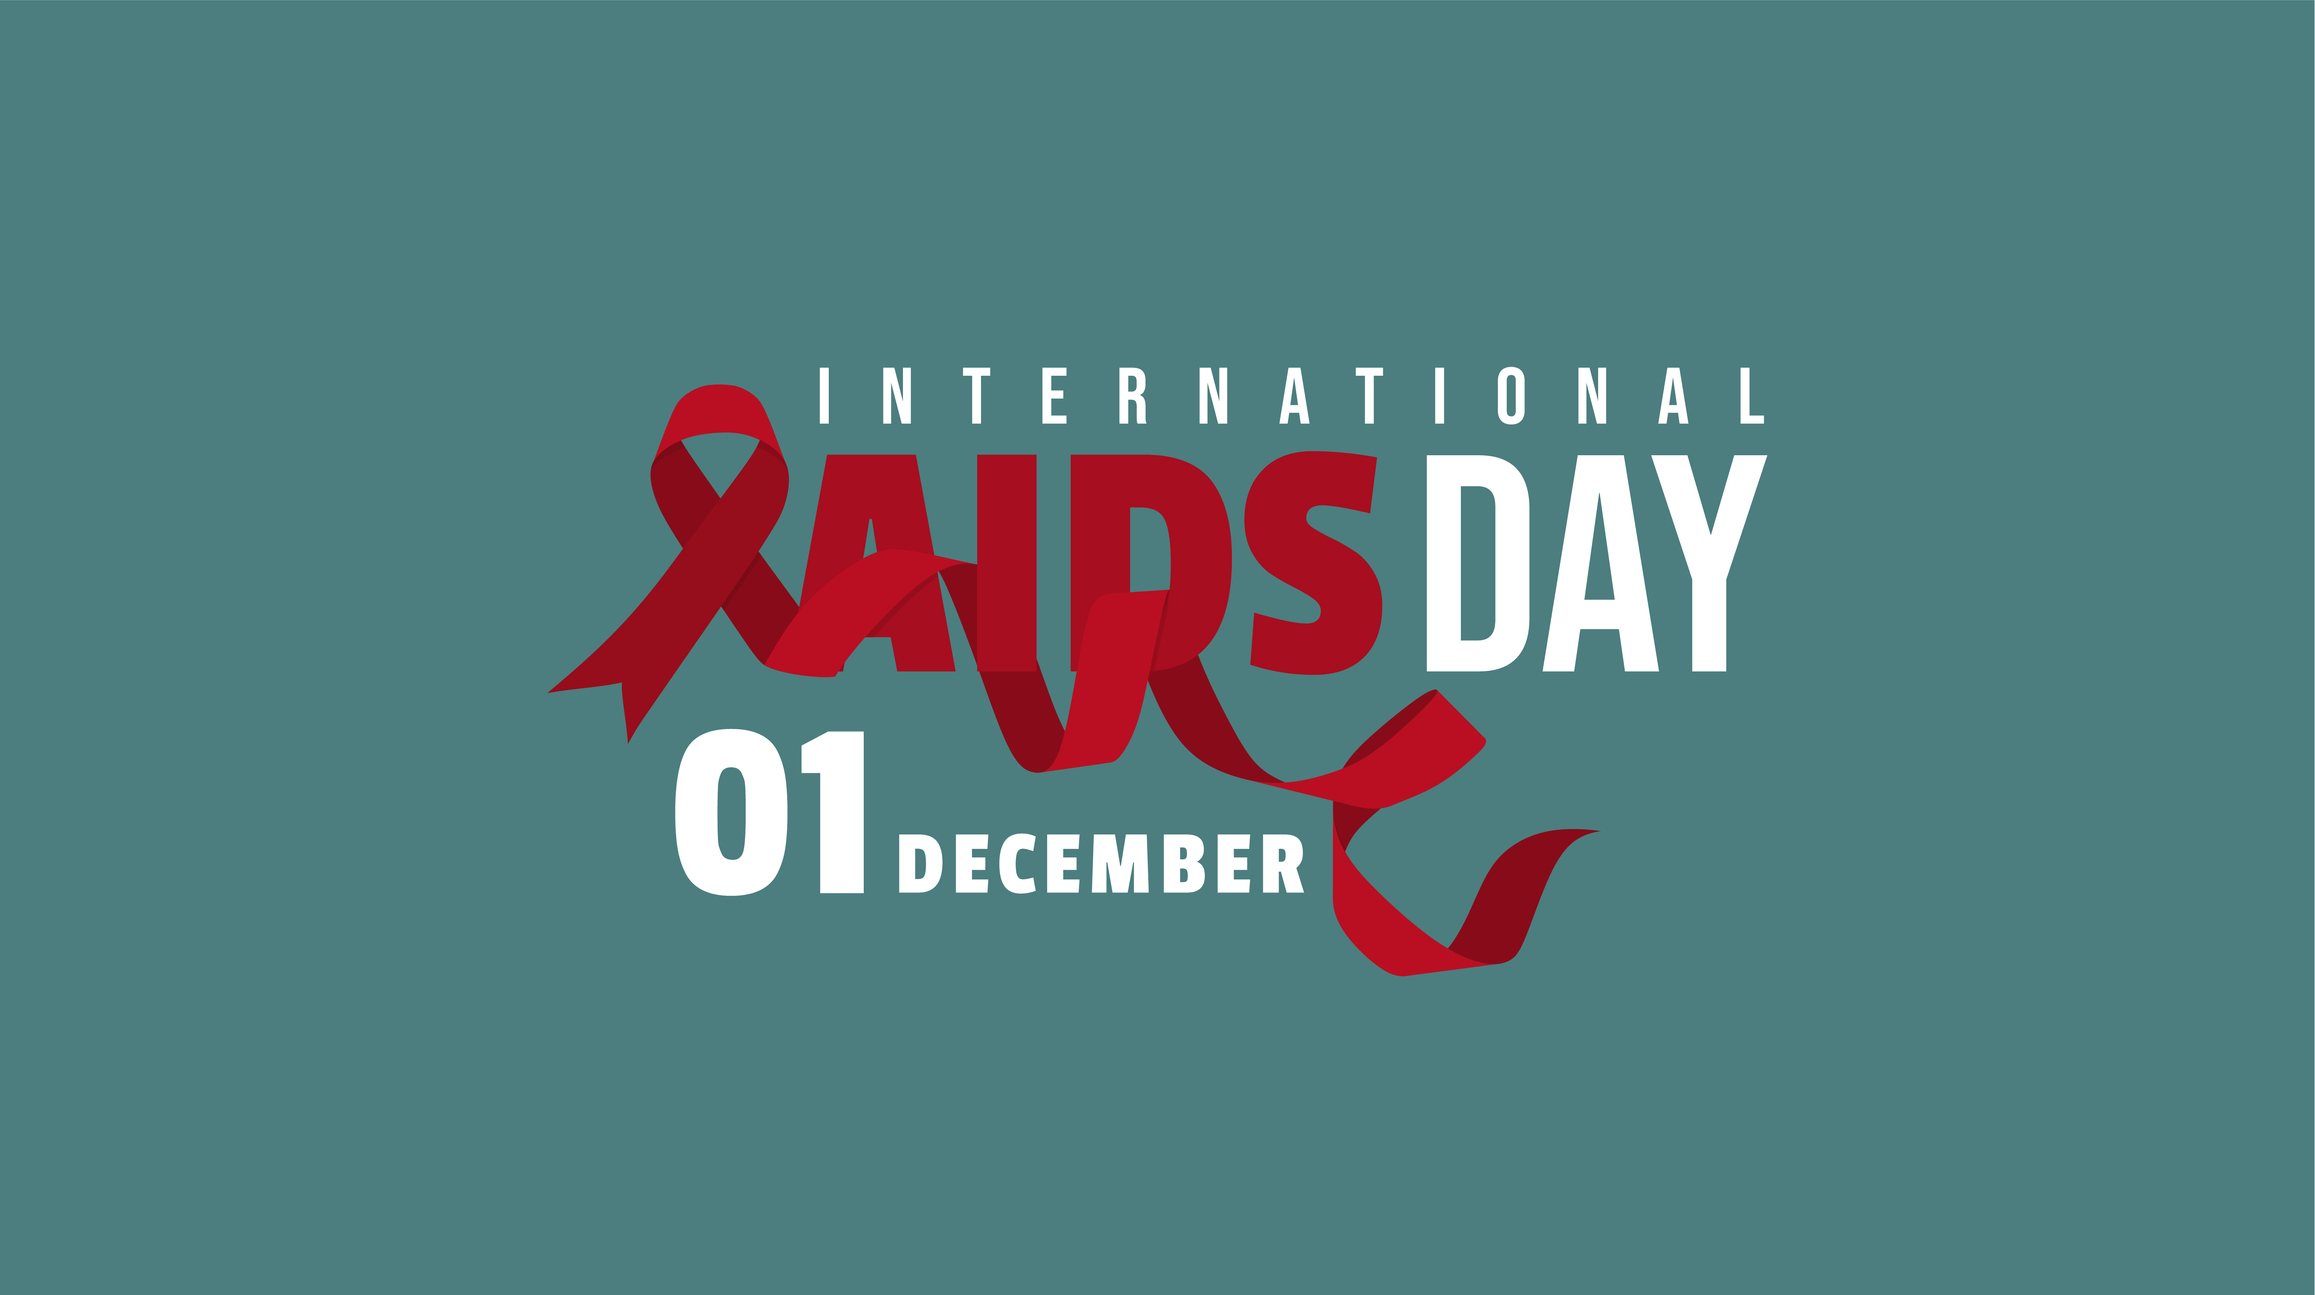 International world AIDS Day